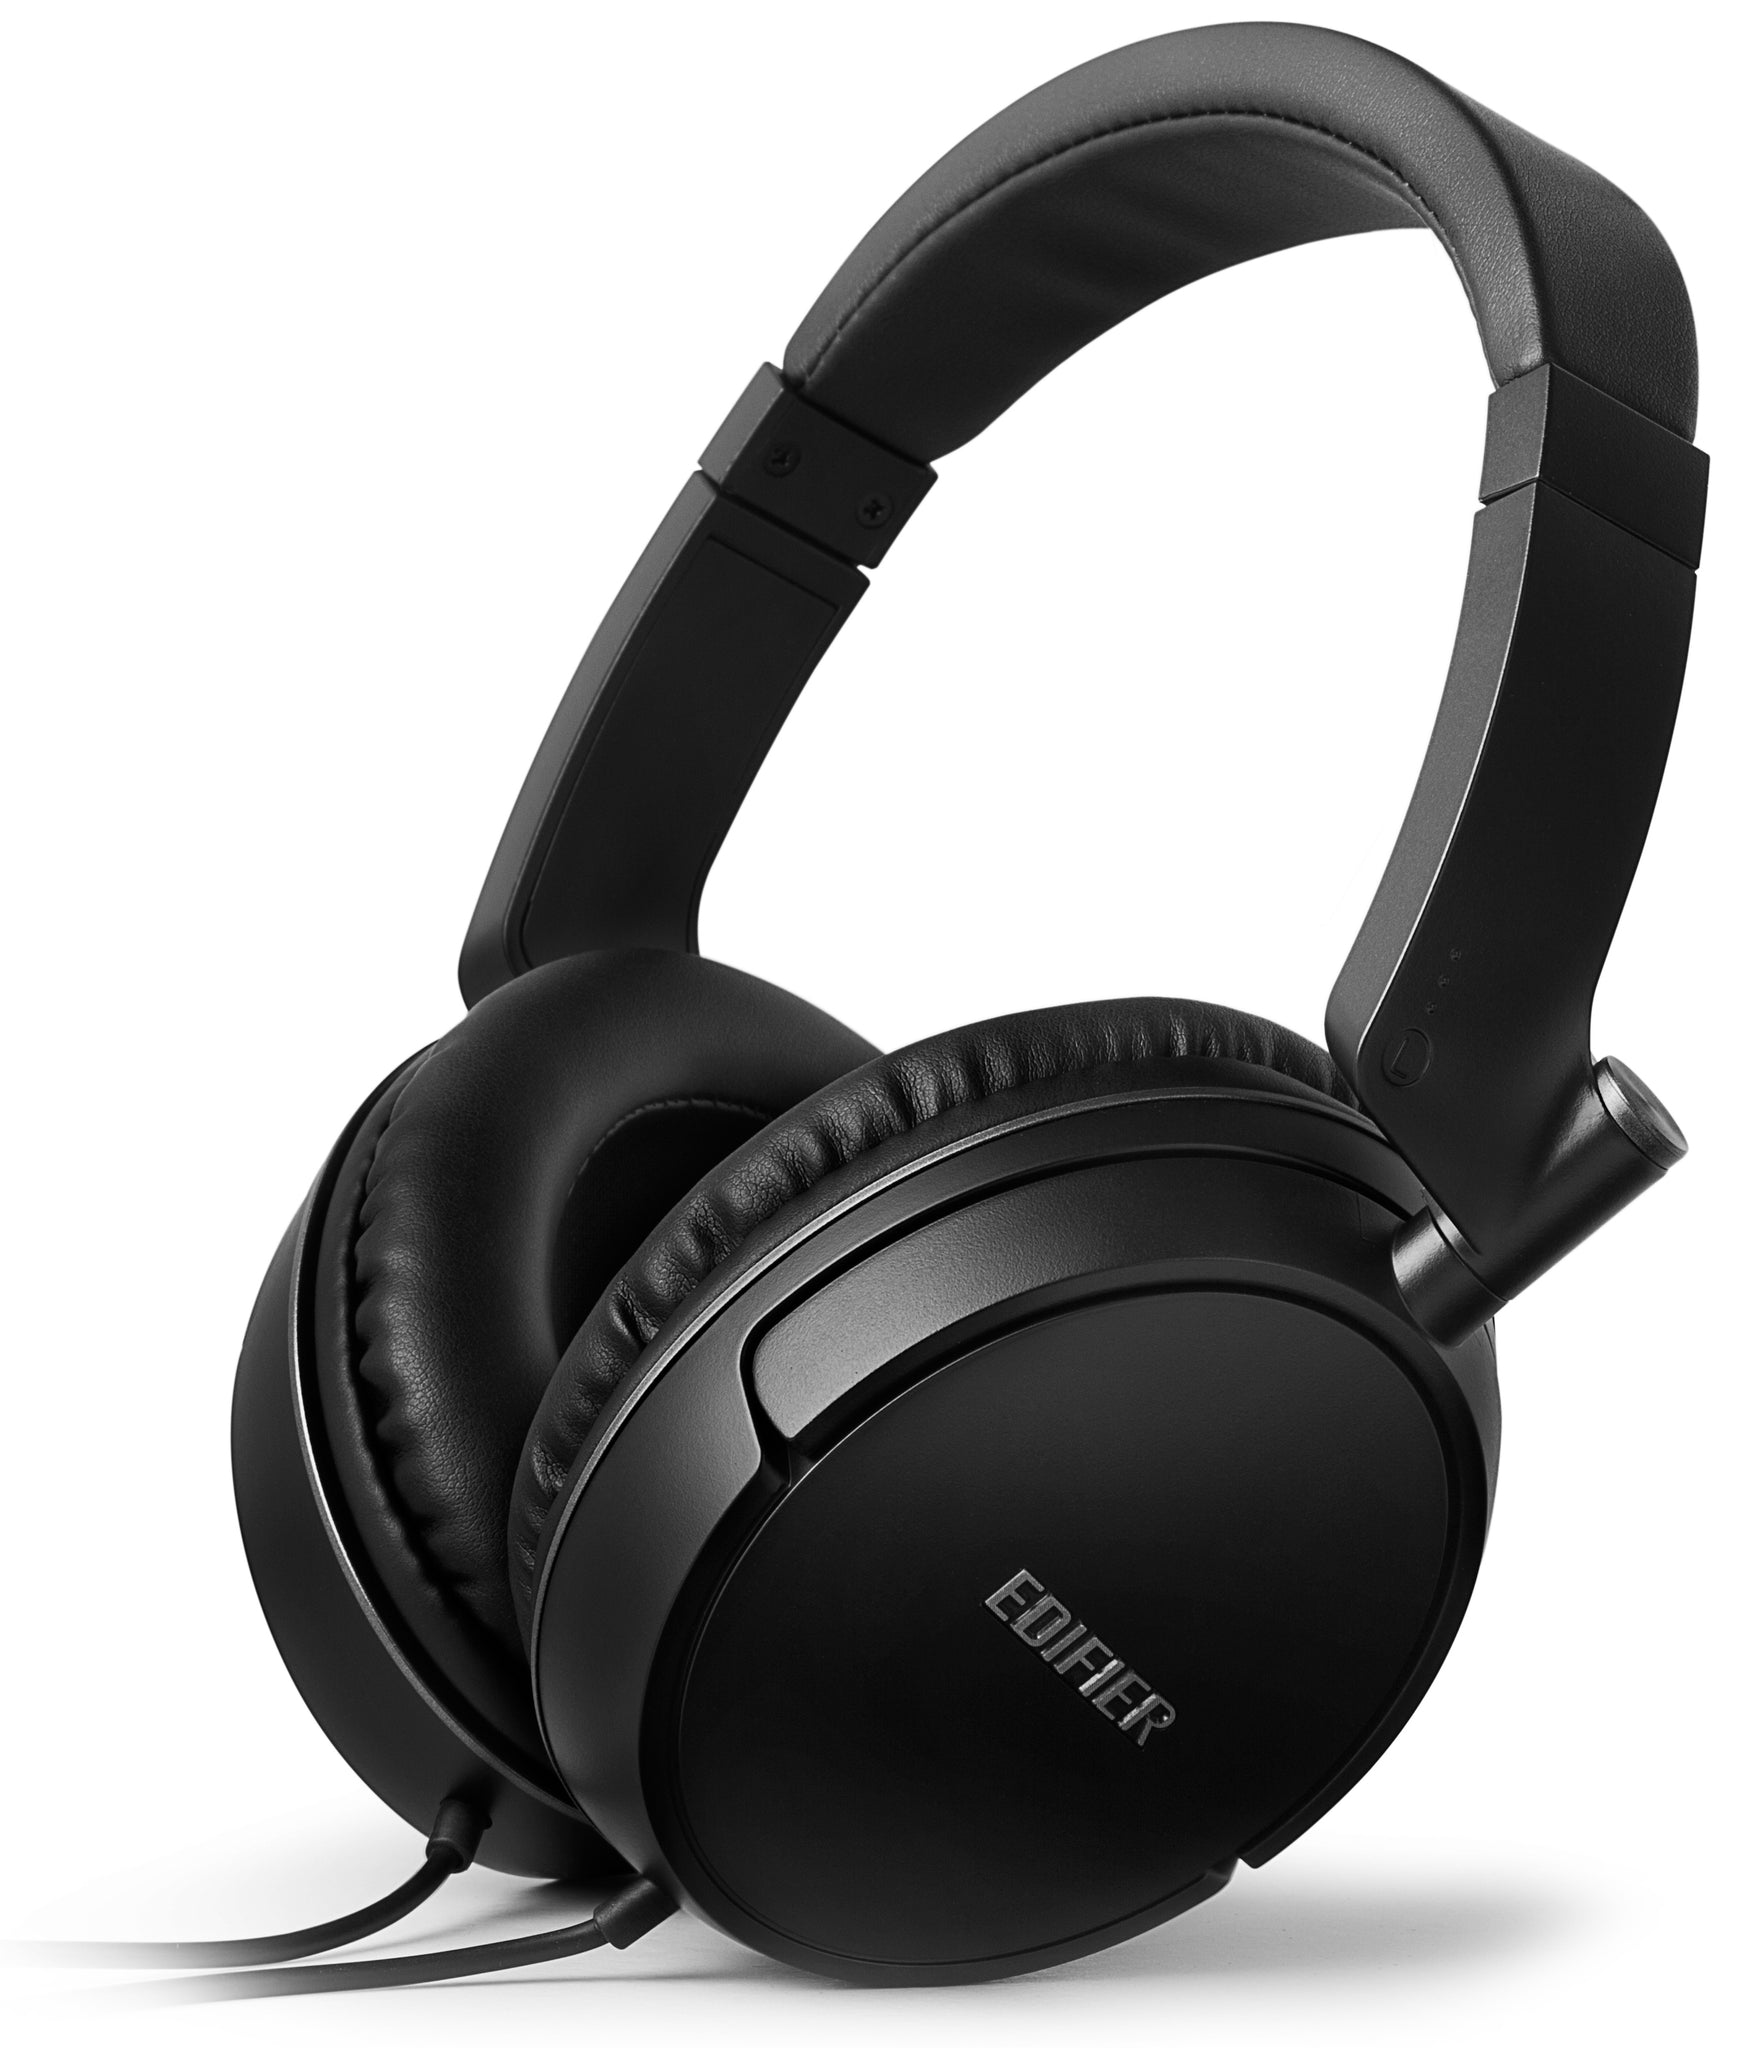 Edifier P841 Premium Headphones With Microphone - Black